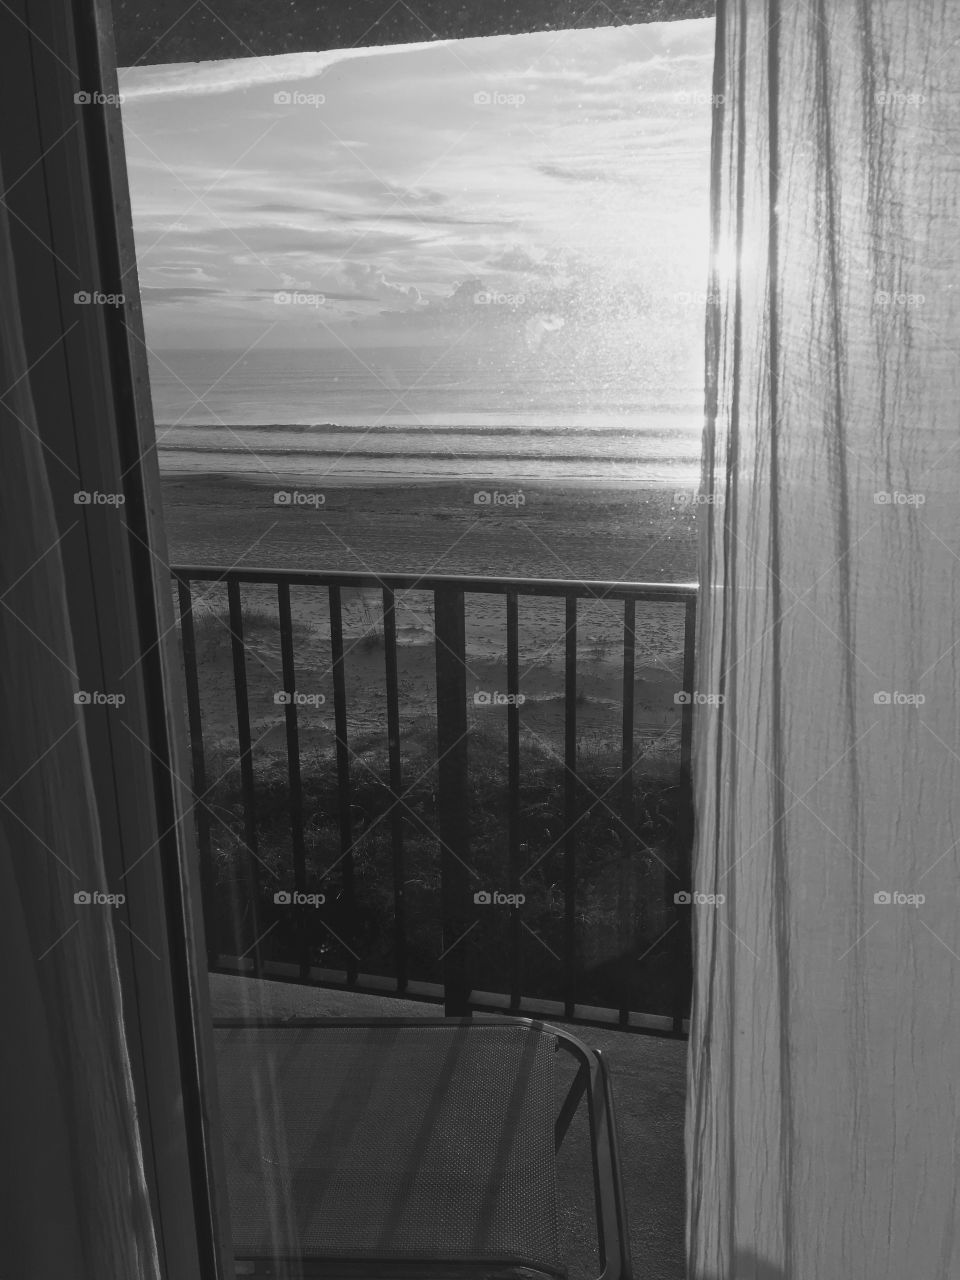 Beach through window